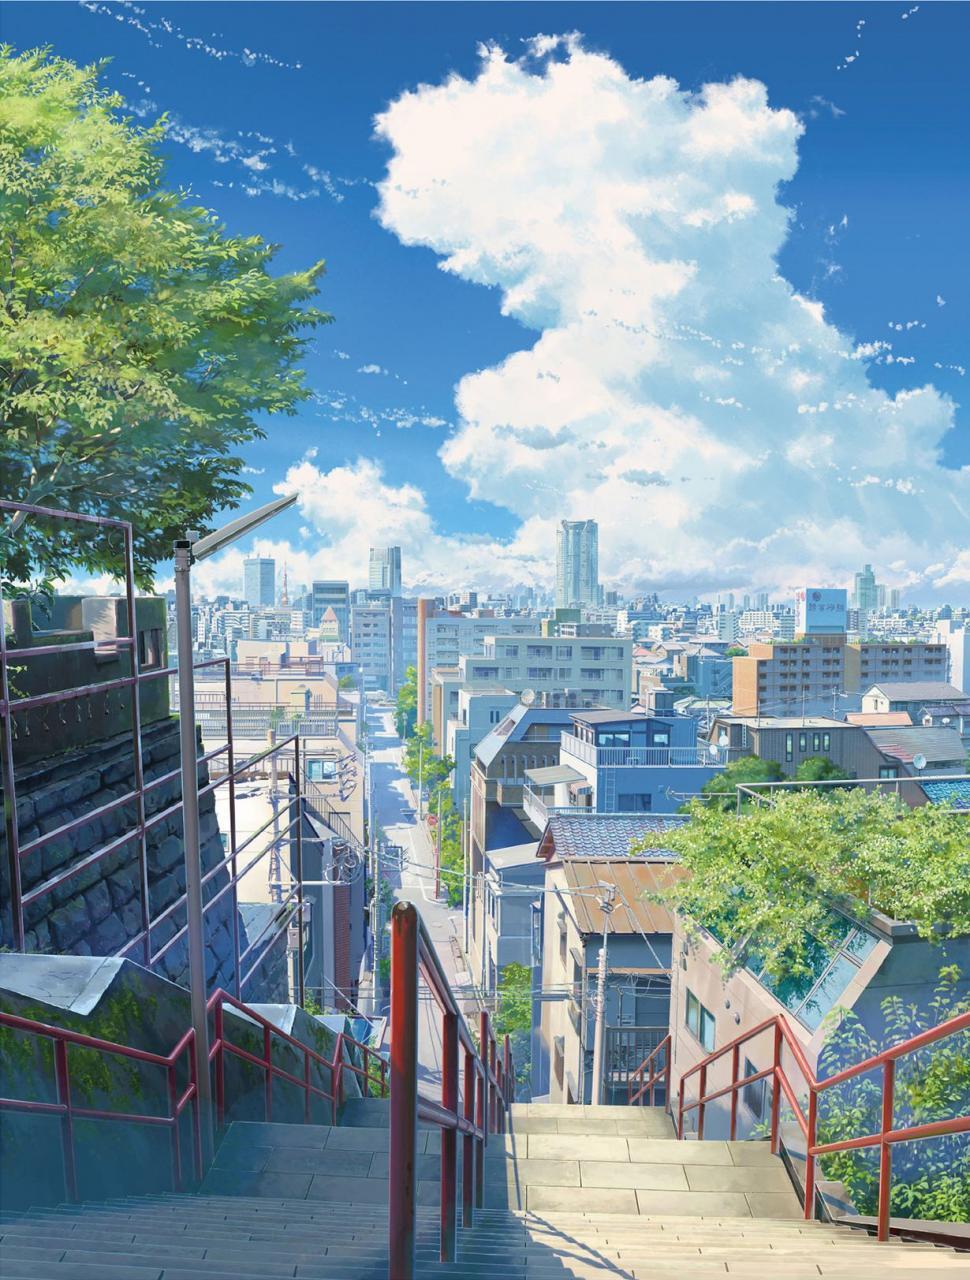 Suga Shrine stair from anime Your Name by Makoto Shinkai Uber